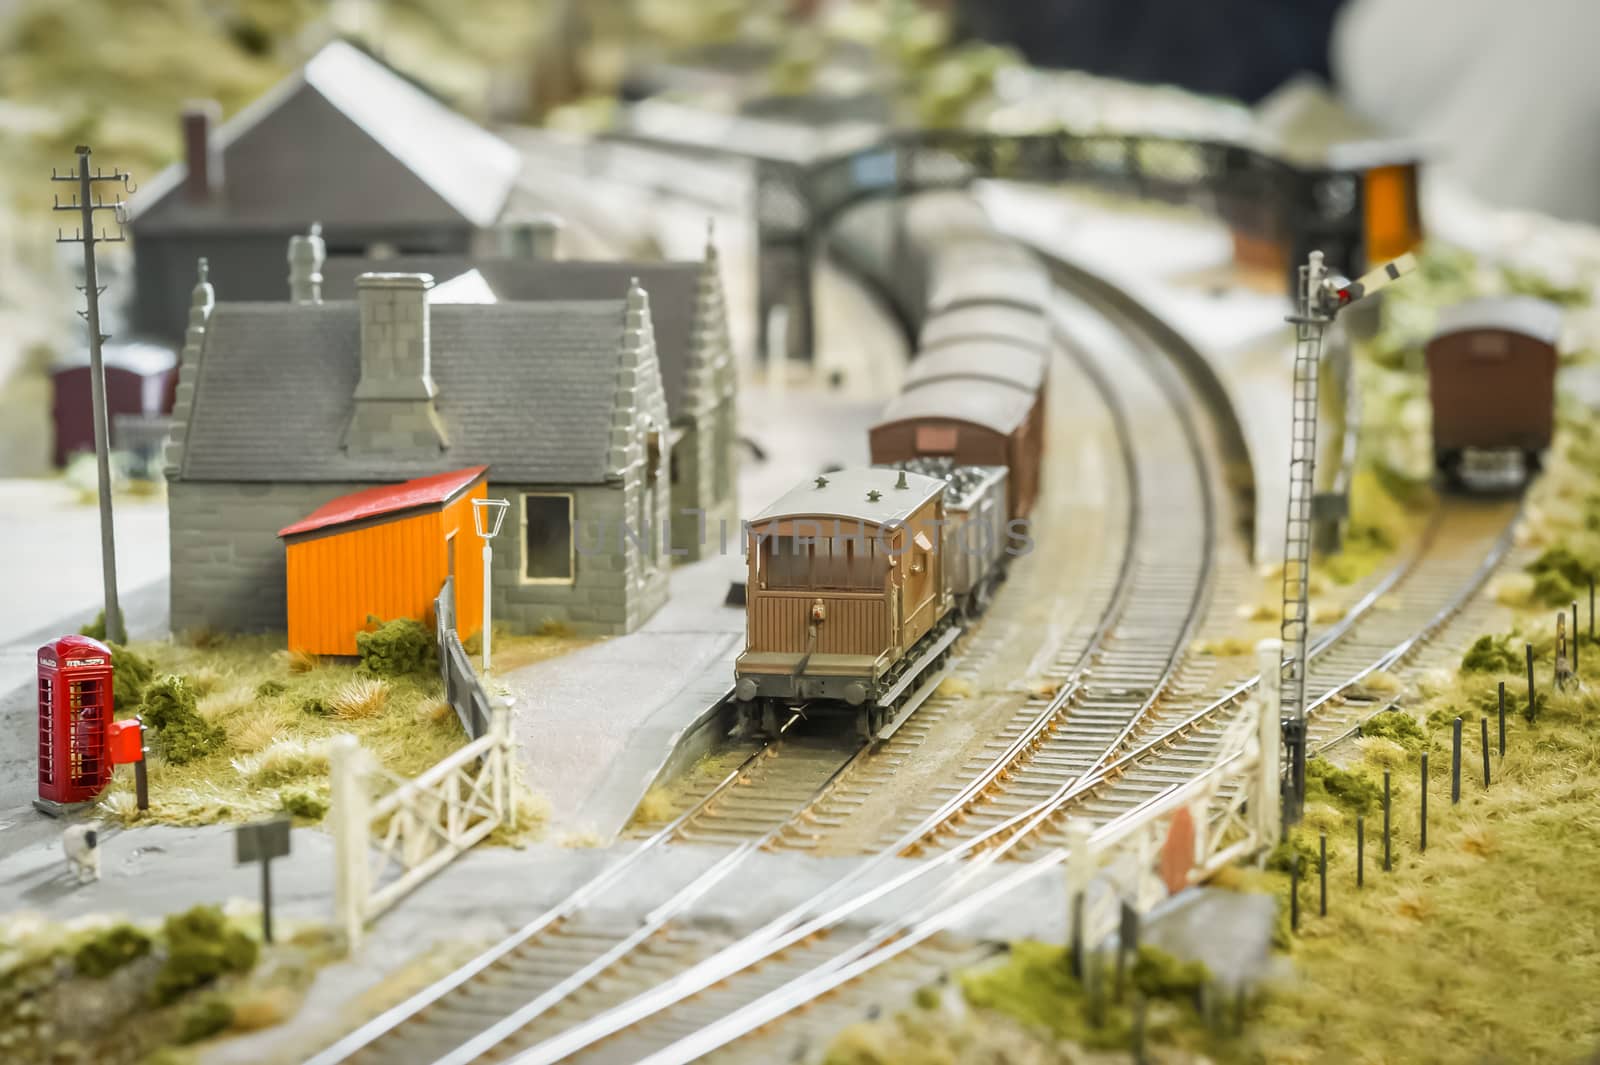 British rural village model railway station - shallow d.o.f.